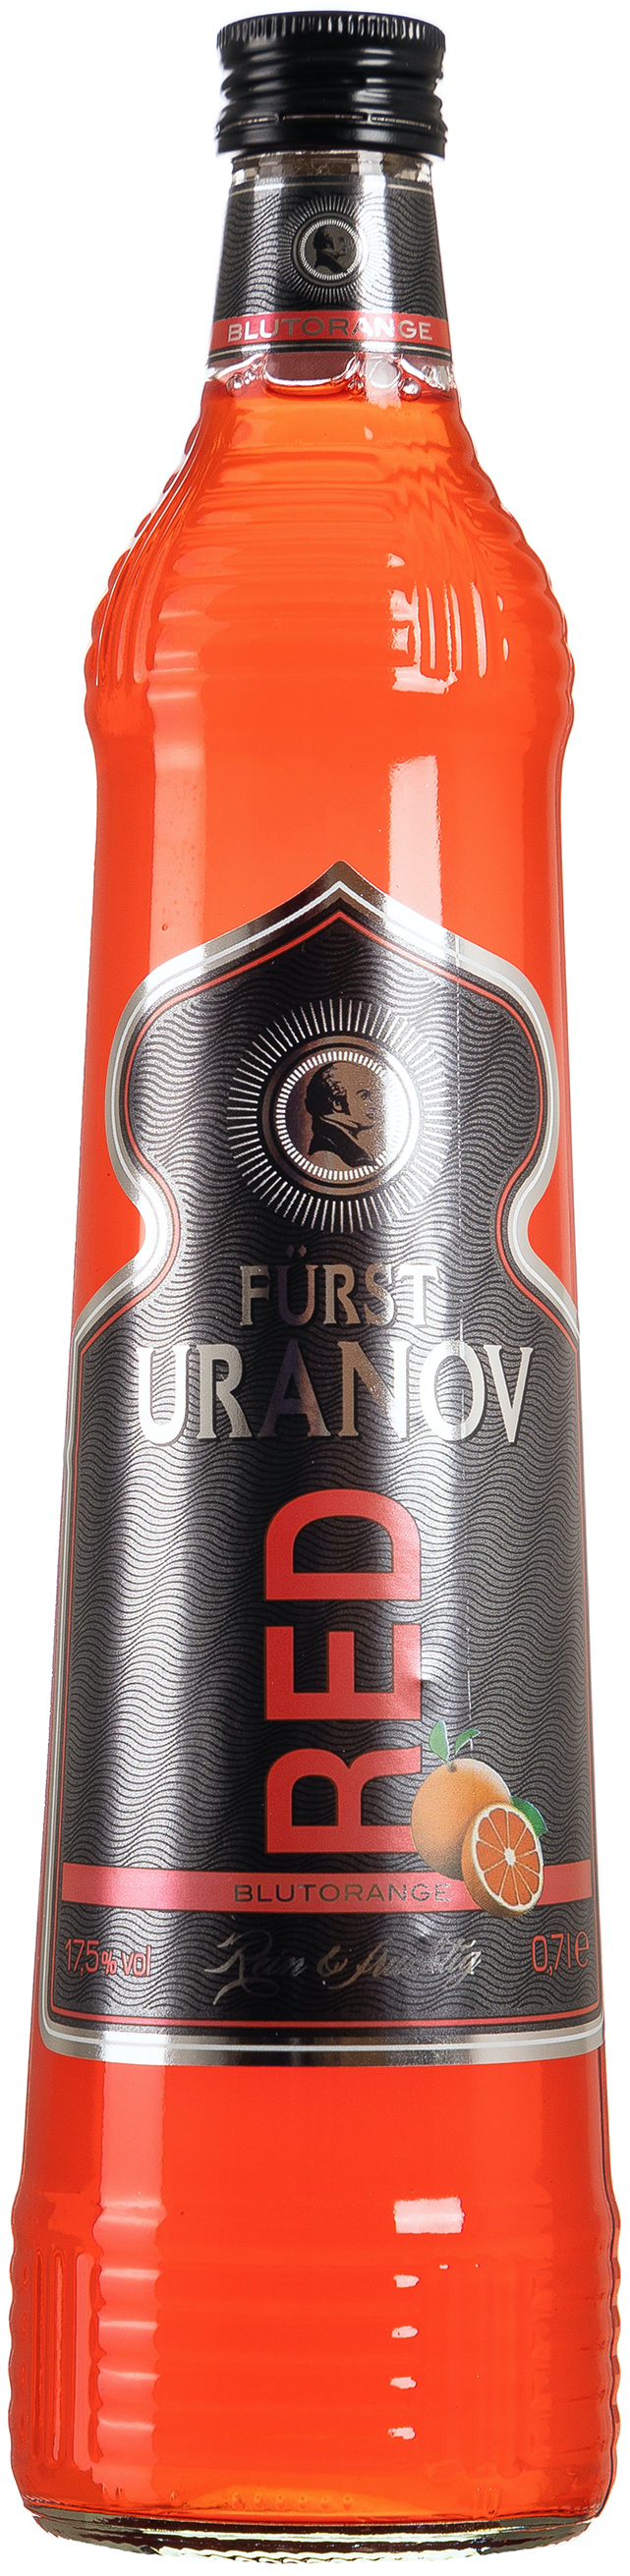 Fürst Uranov Red Blutorange 17,5% vol. 0,7L